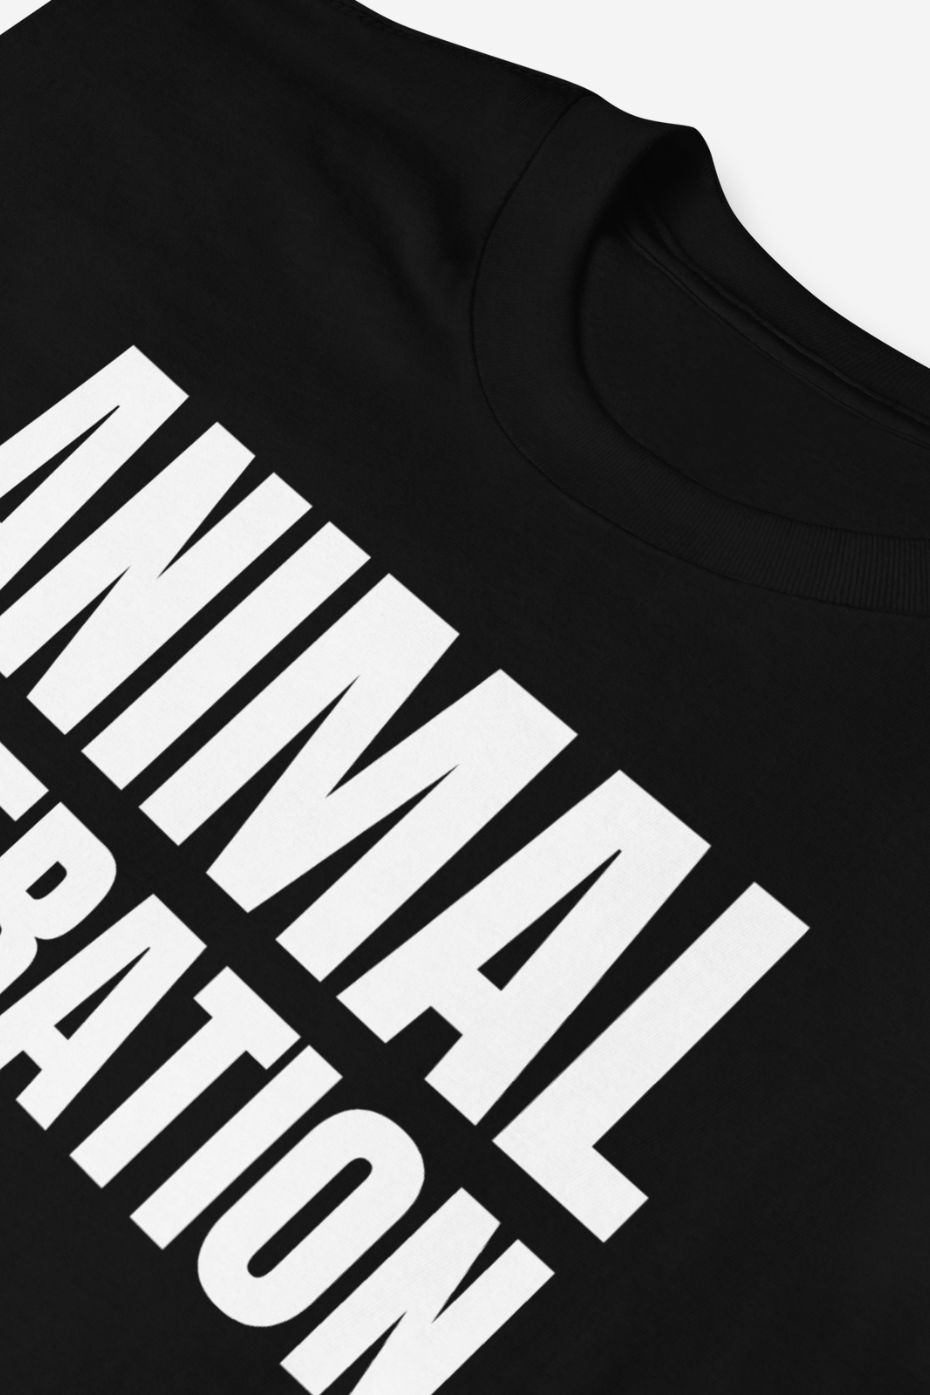 Animal Liberation Unisex T-Shirt